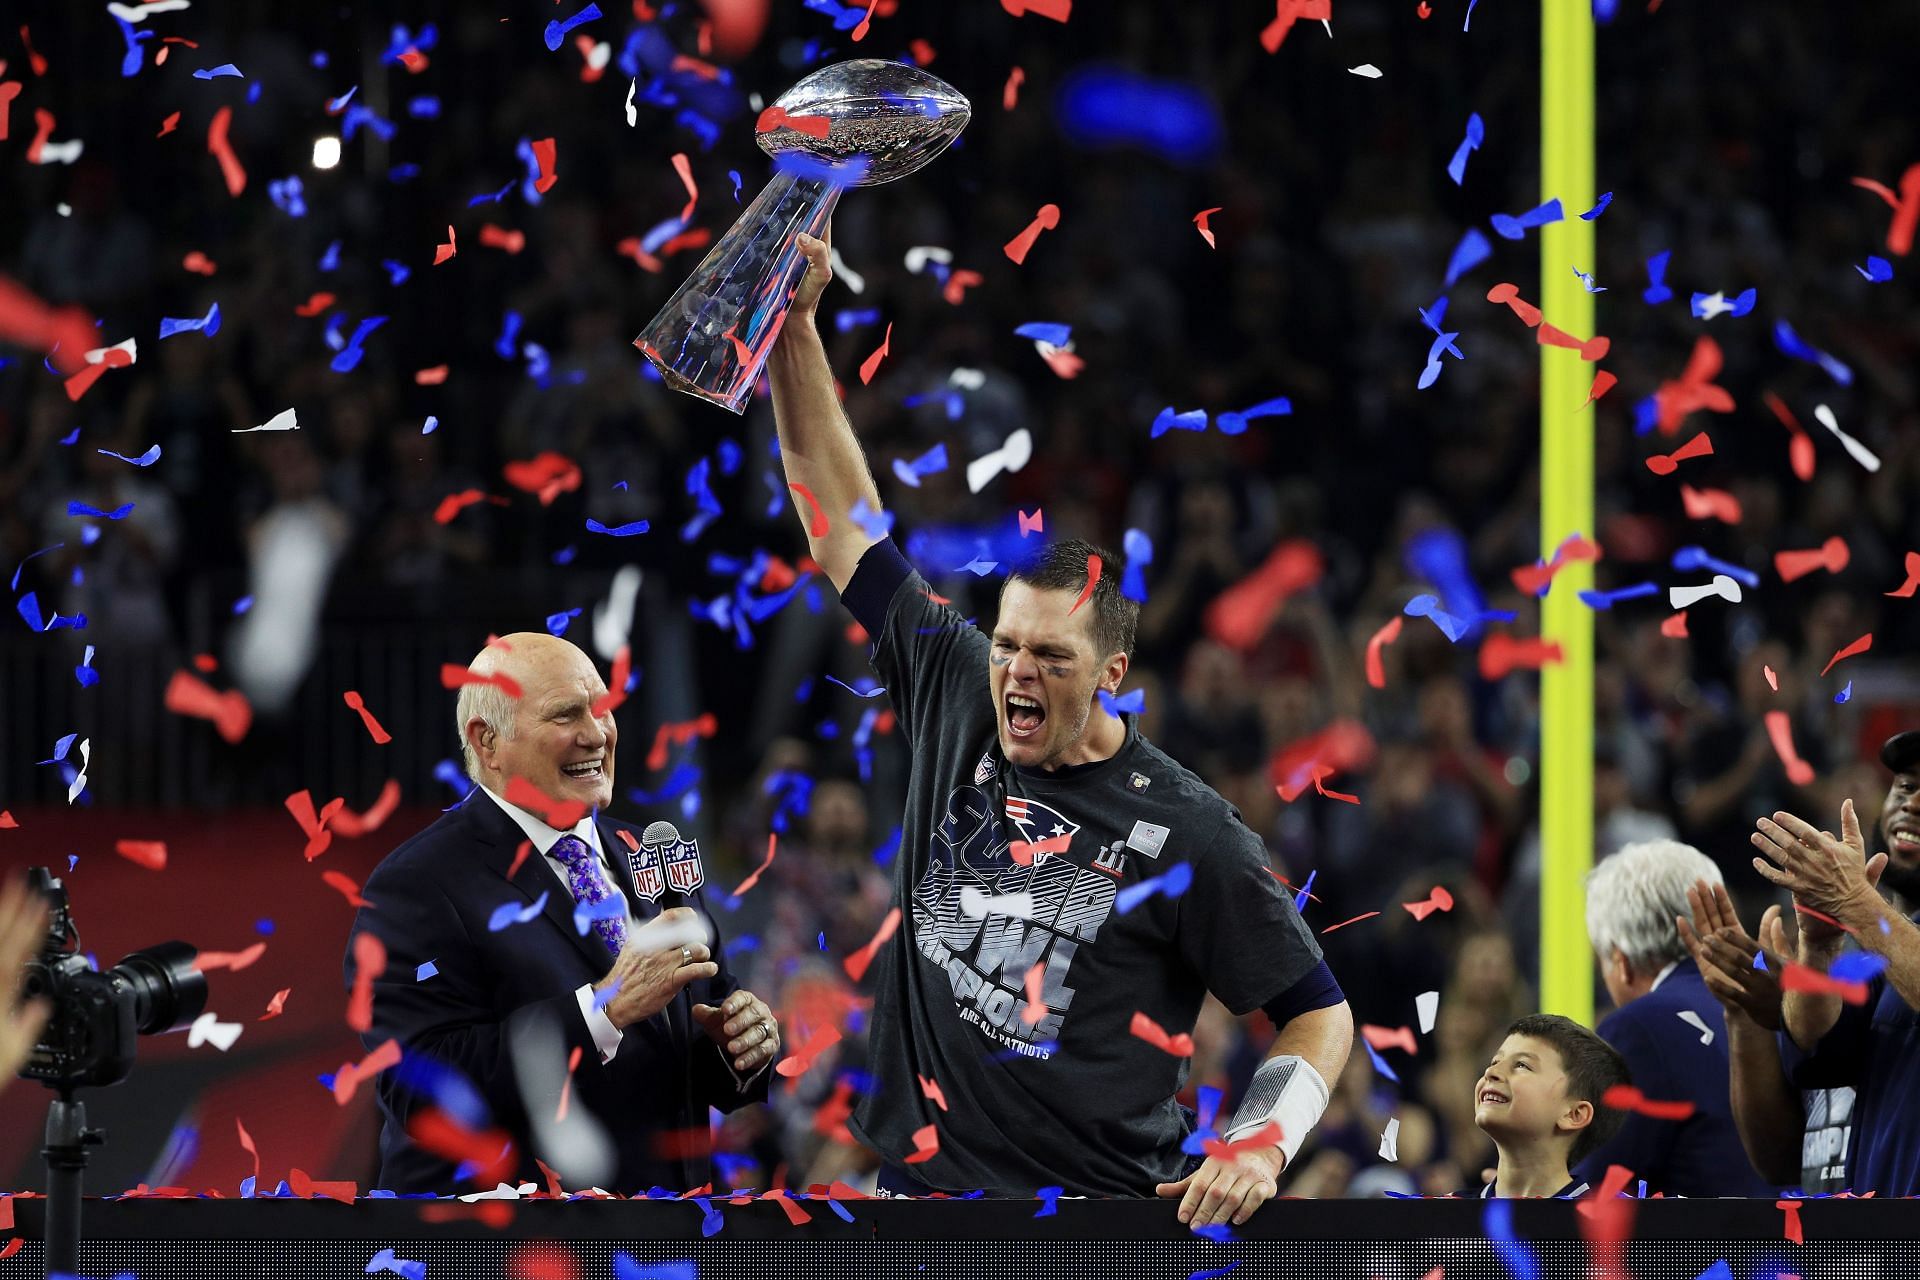 Tom Brady lifting the Vince Lombardi trophy after Super Bowl LI